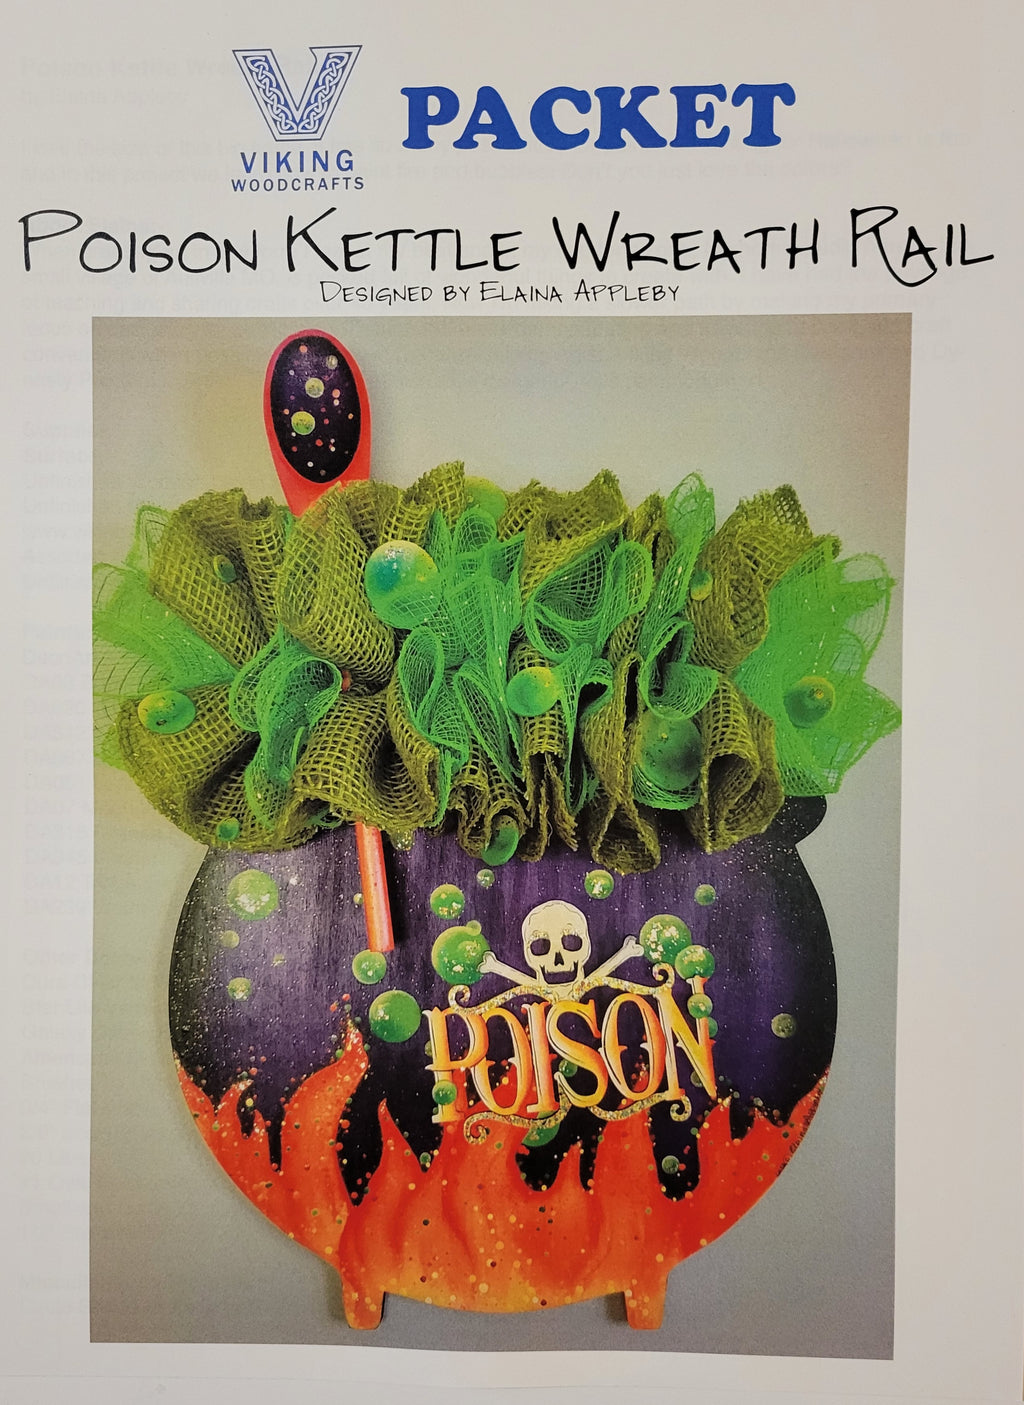 Poison Kettle Wreath Rail Packet by Elaina Appleby